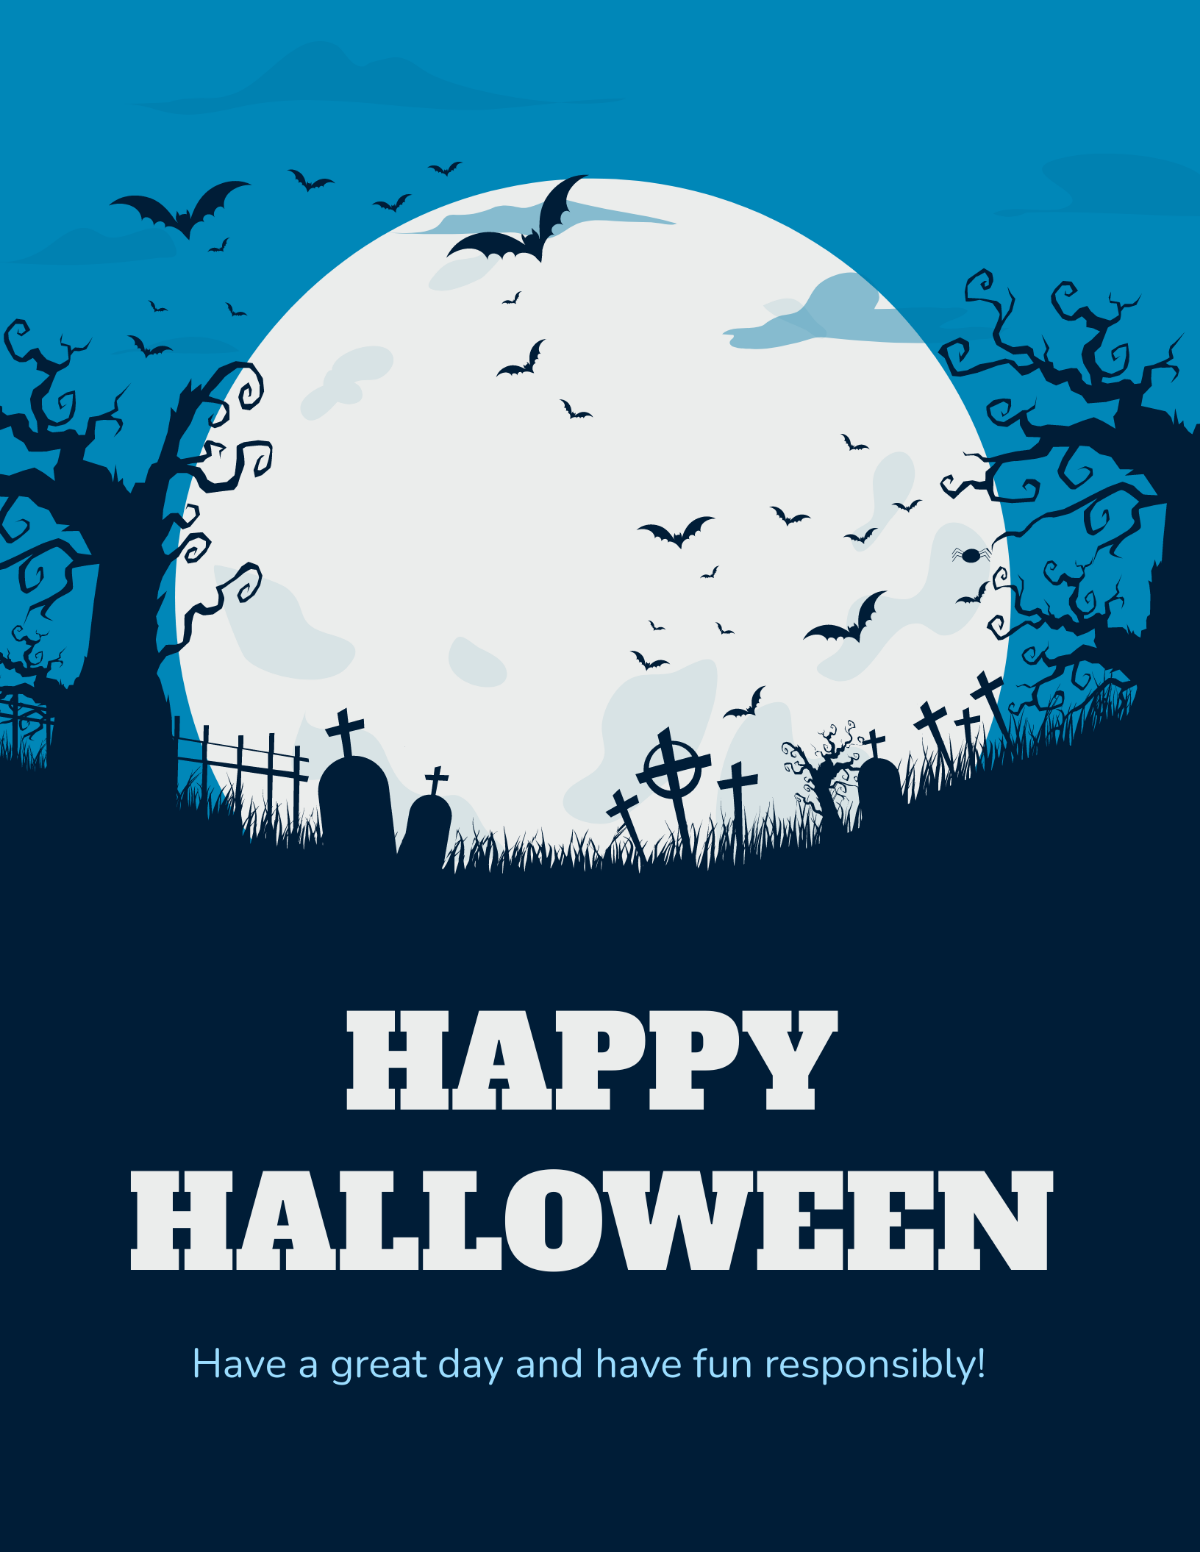 Creative Halloween Flyer Template